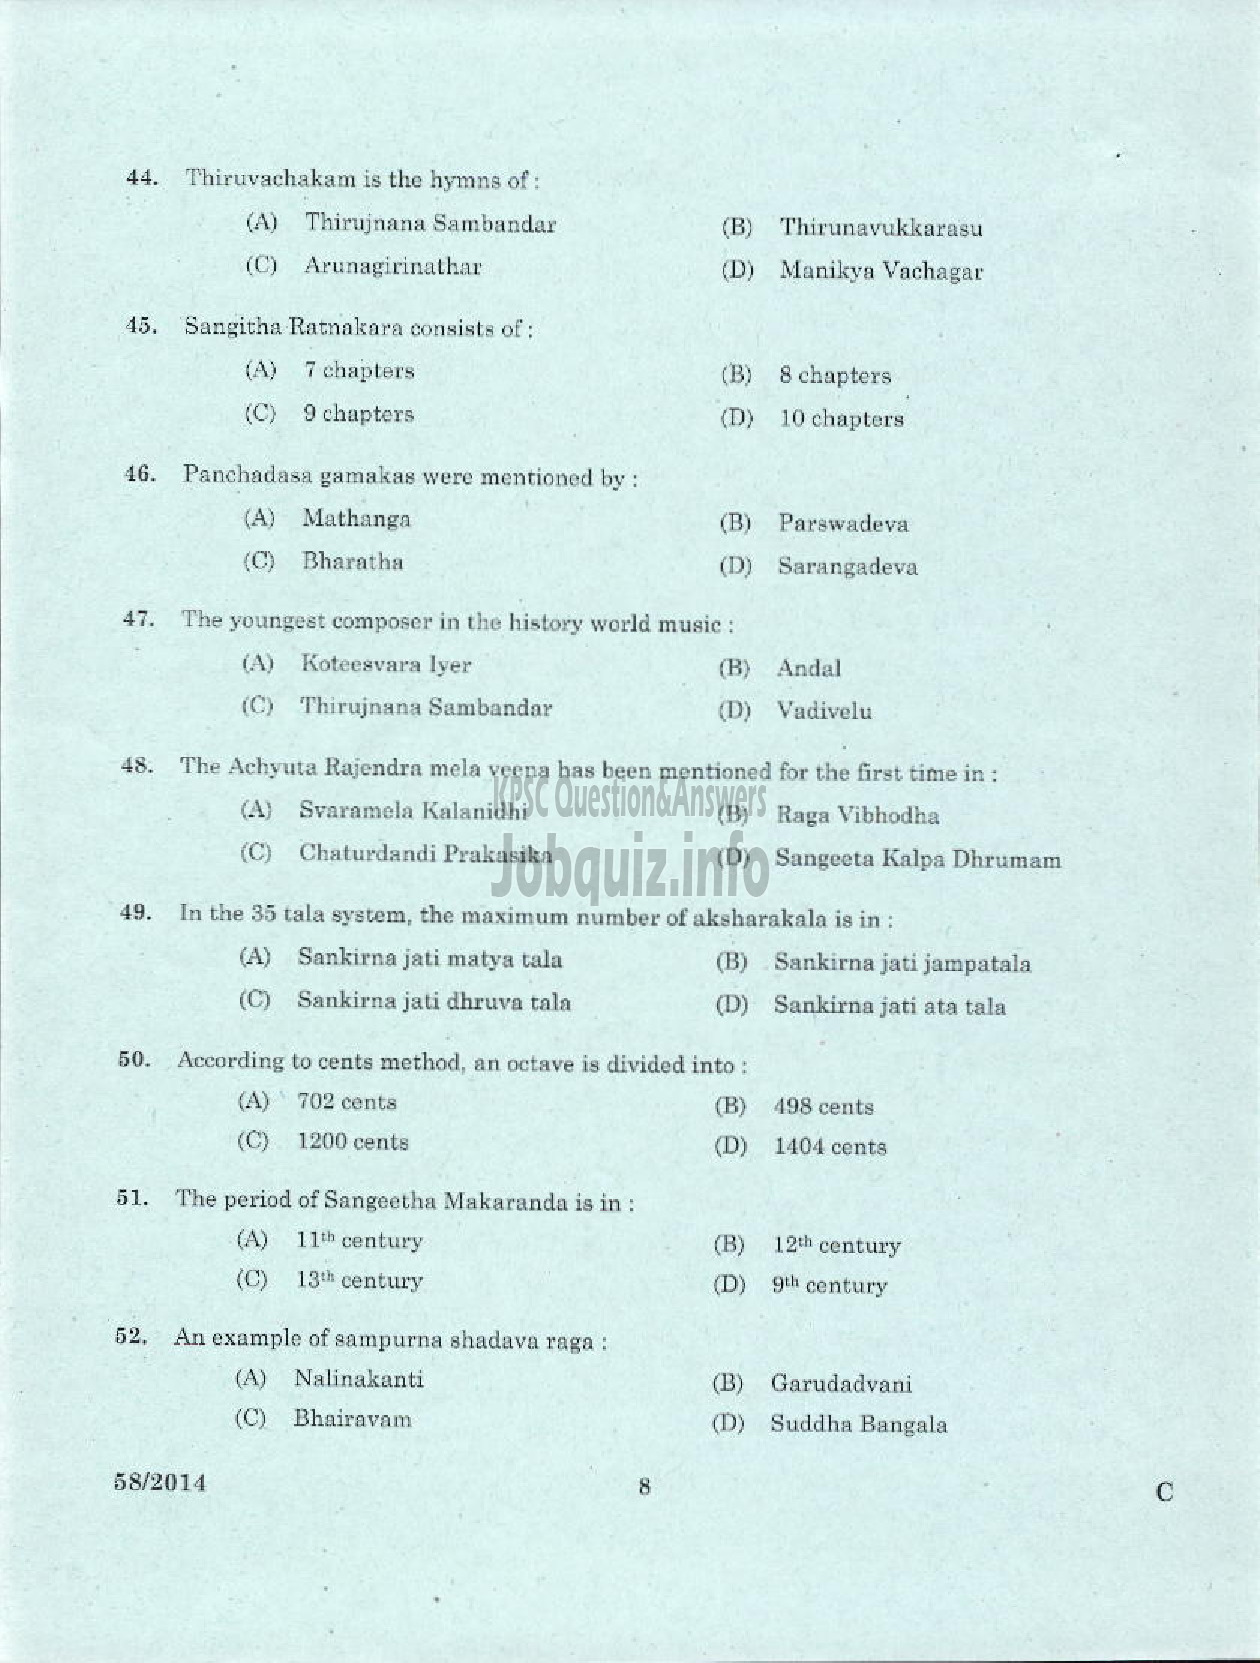 Kerala PSC Question Paper - LECTURER IN MUSIC KERALA COLLEGIATE EDUCATION-6